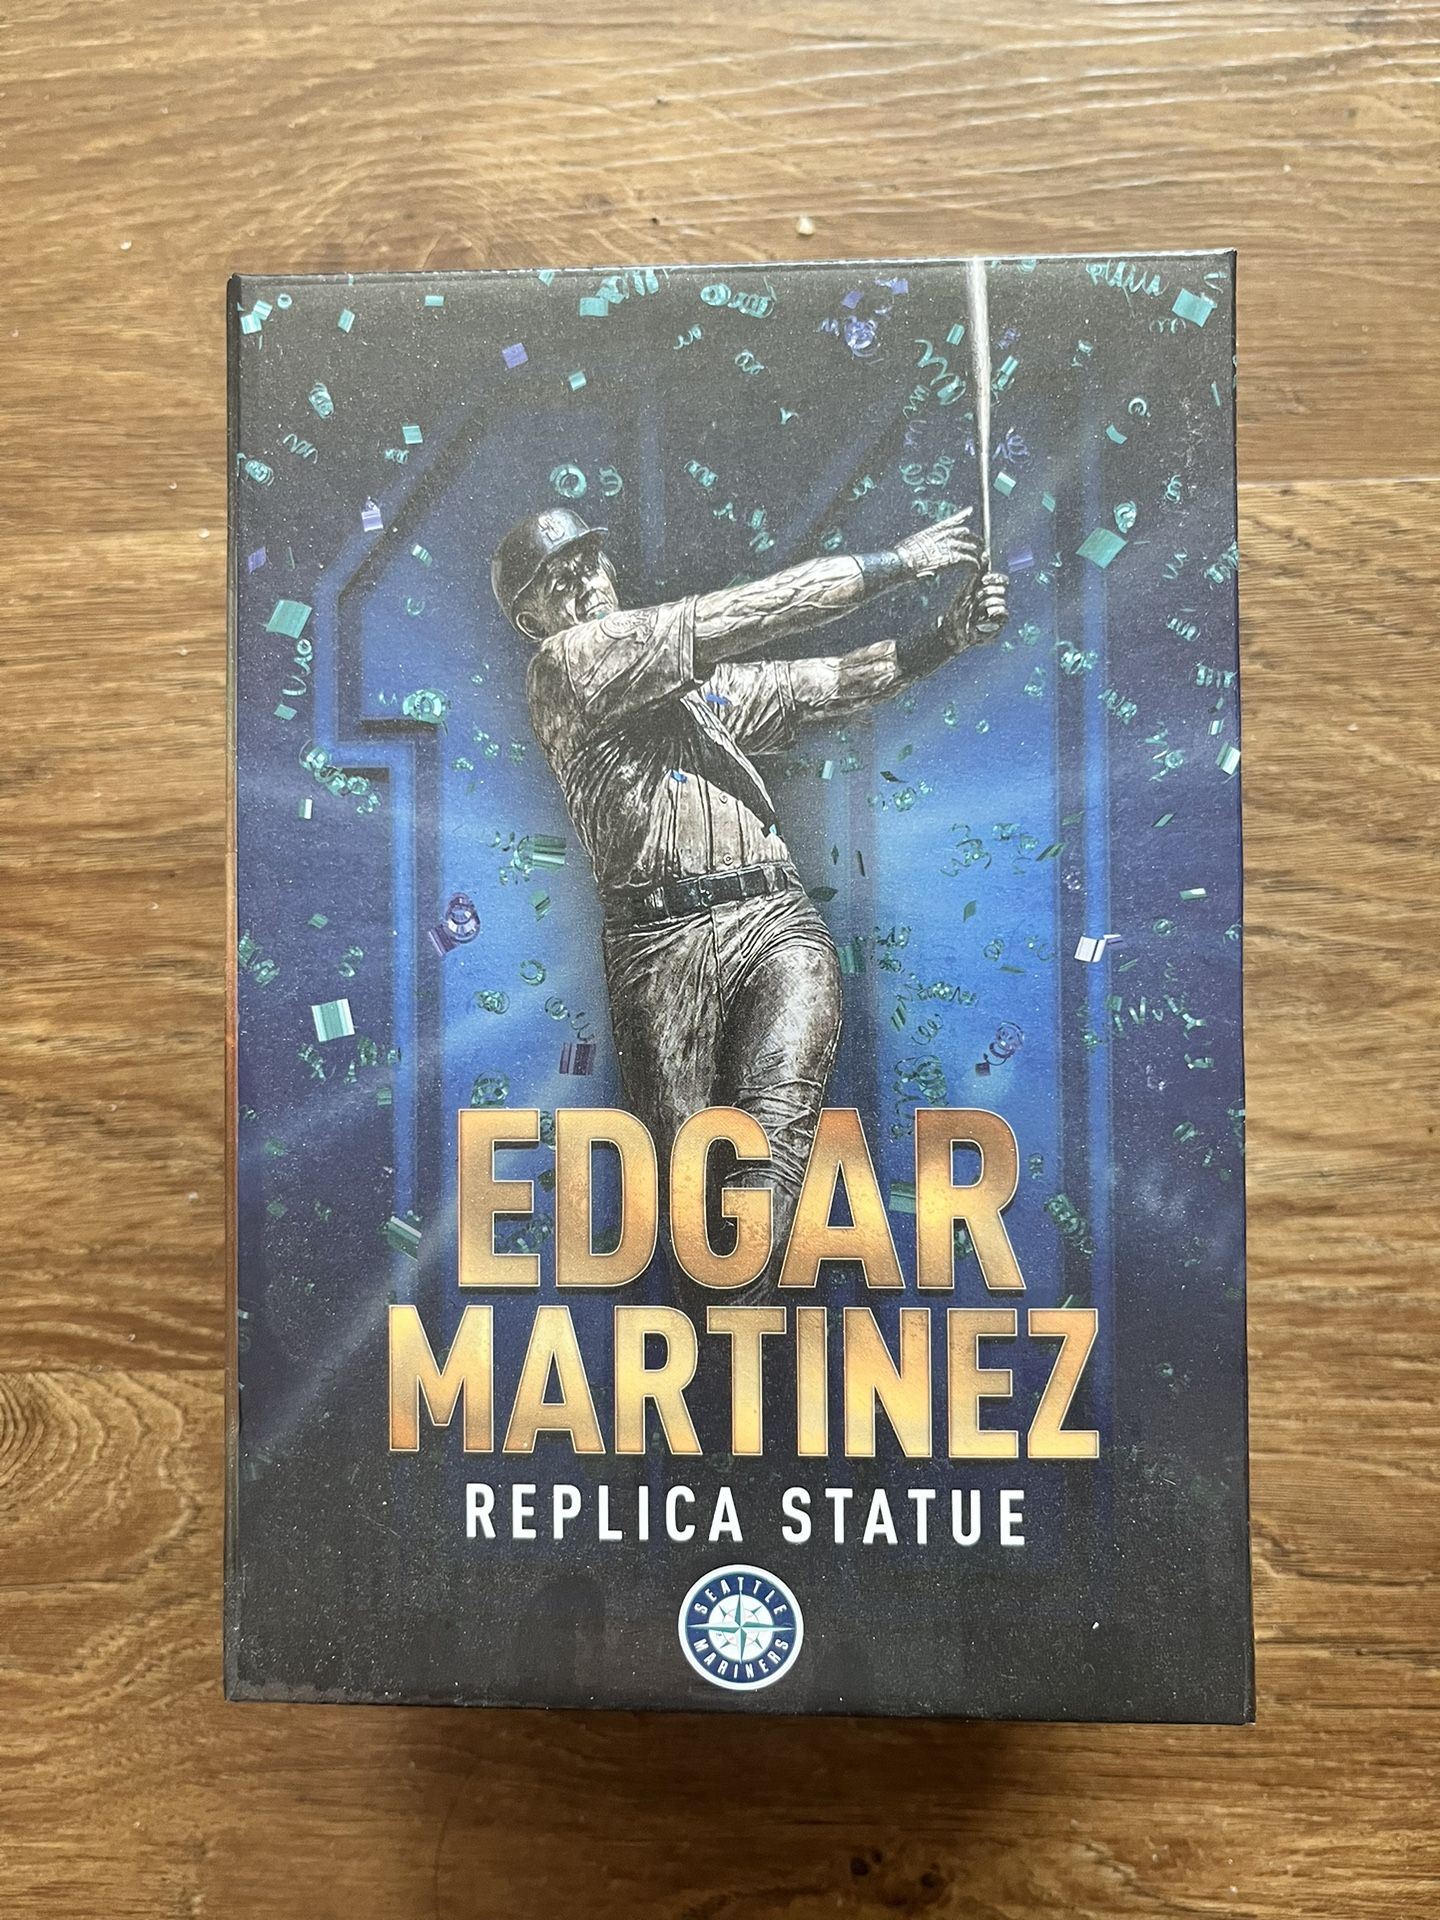 Autographed Edgar Martinez Statue Replica